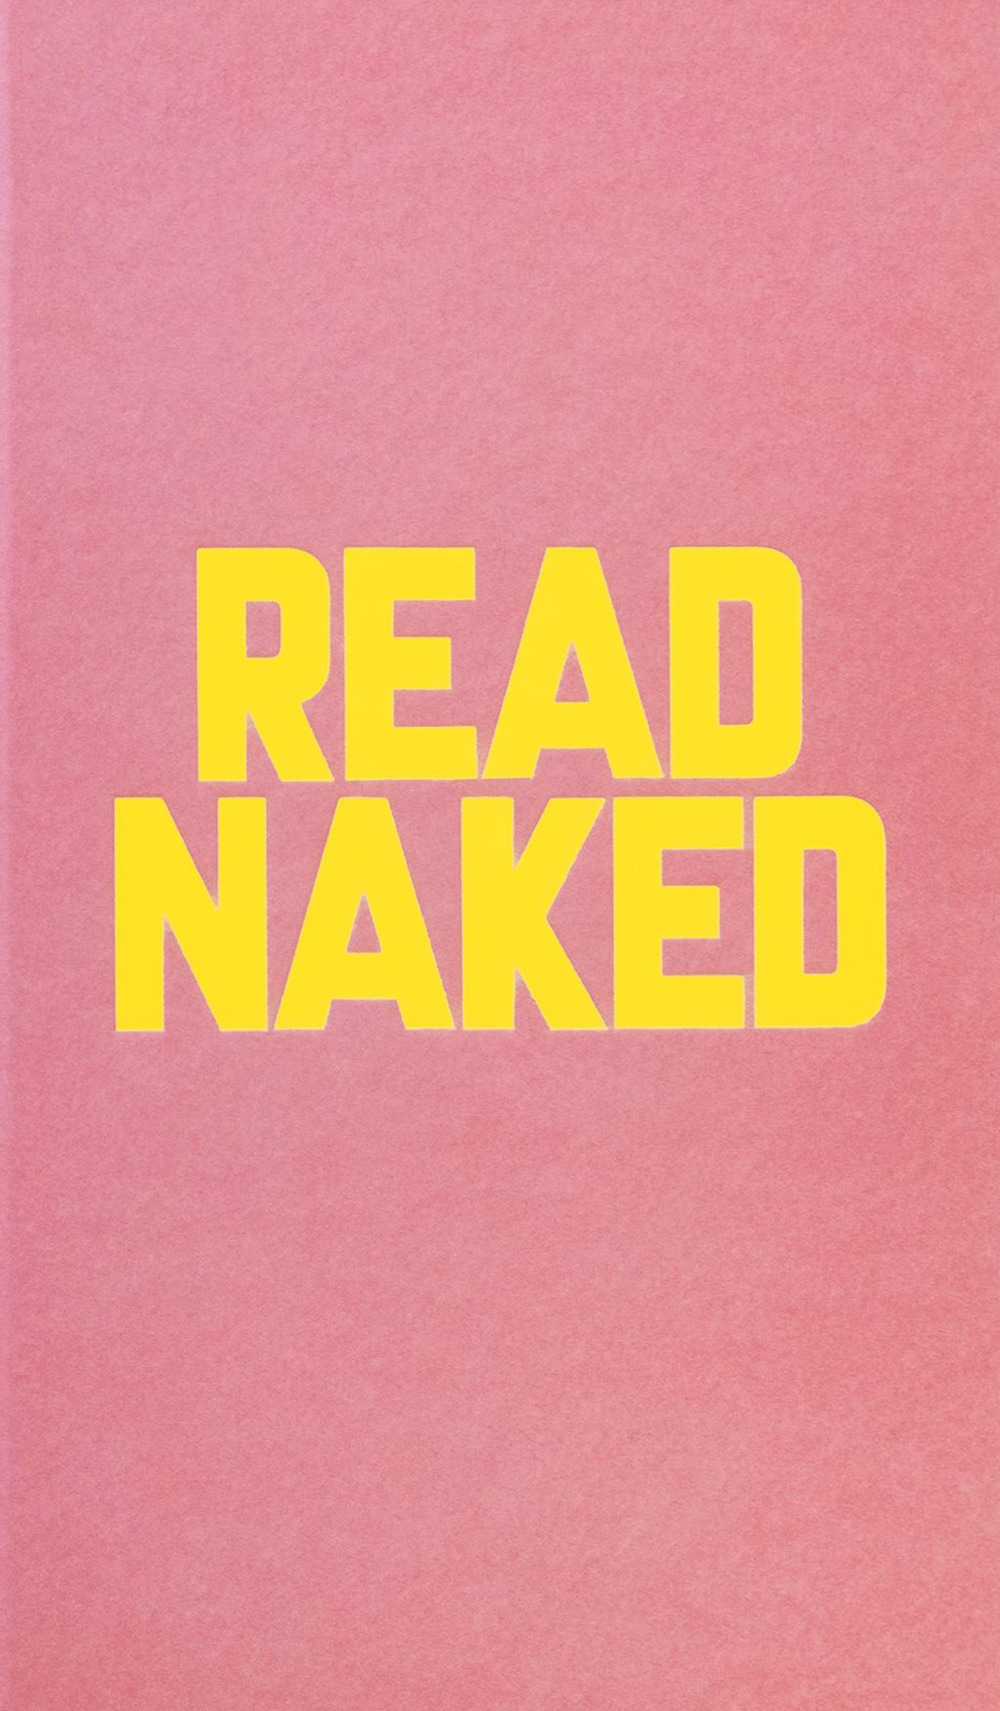 Libri Erik Kessels - Read Naked. Ediz. Illustrata NUOVO SIGILLATO SUBITO DISPONIBILE